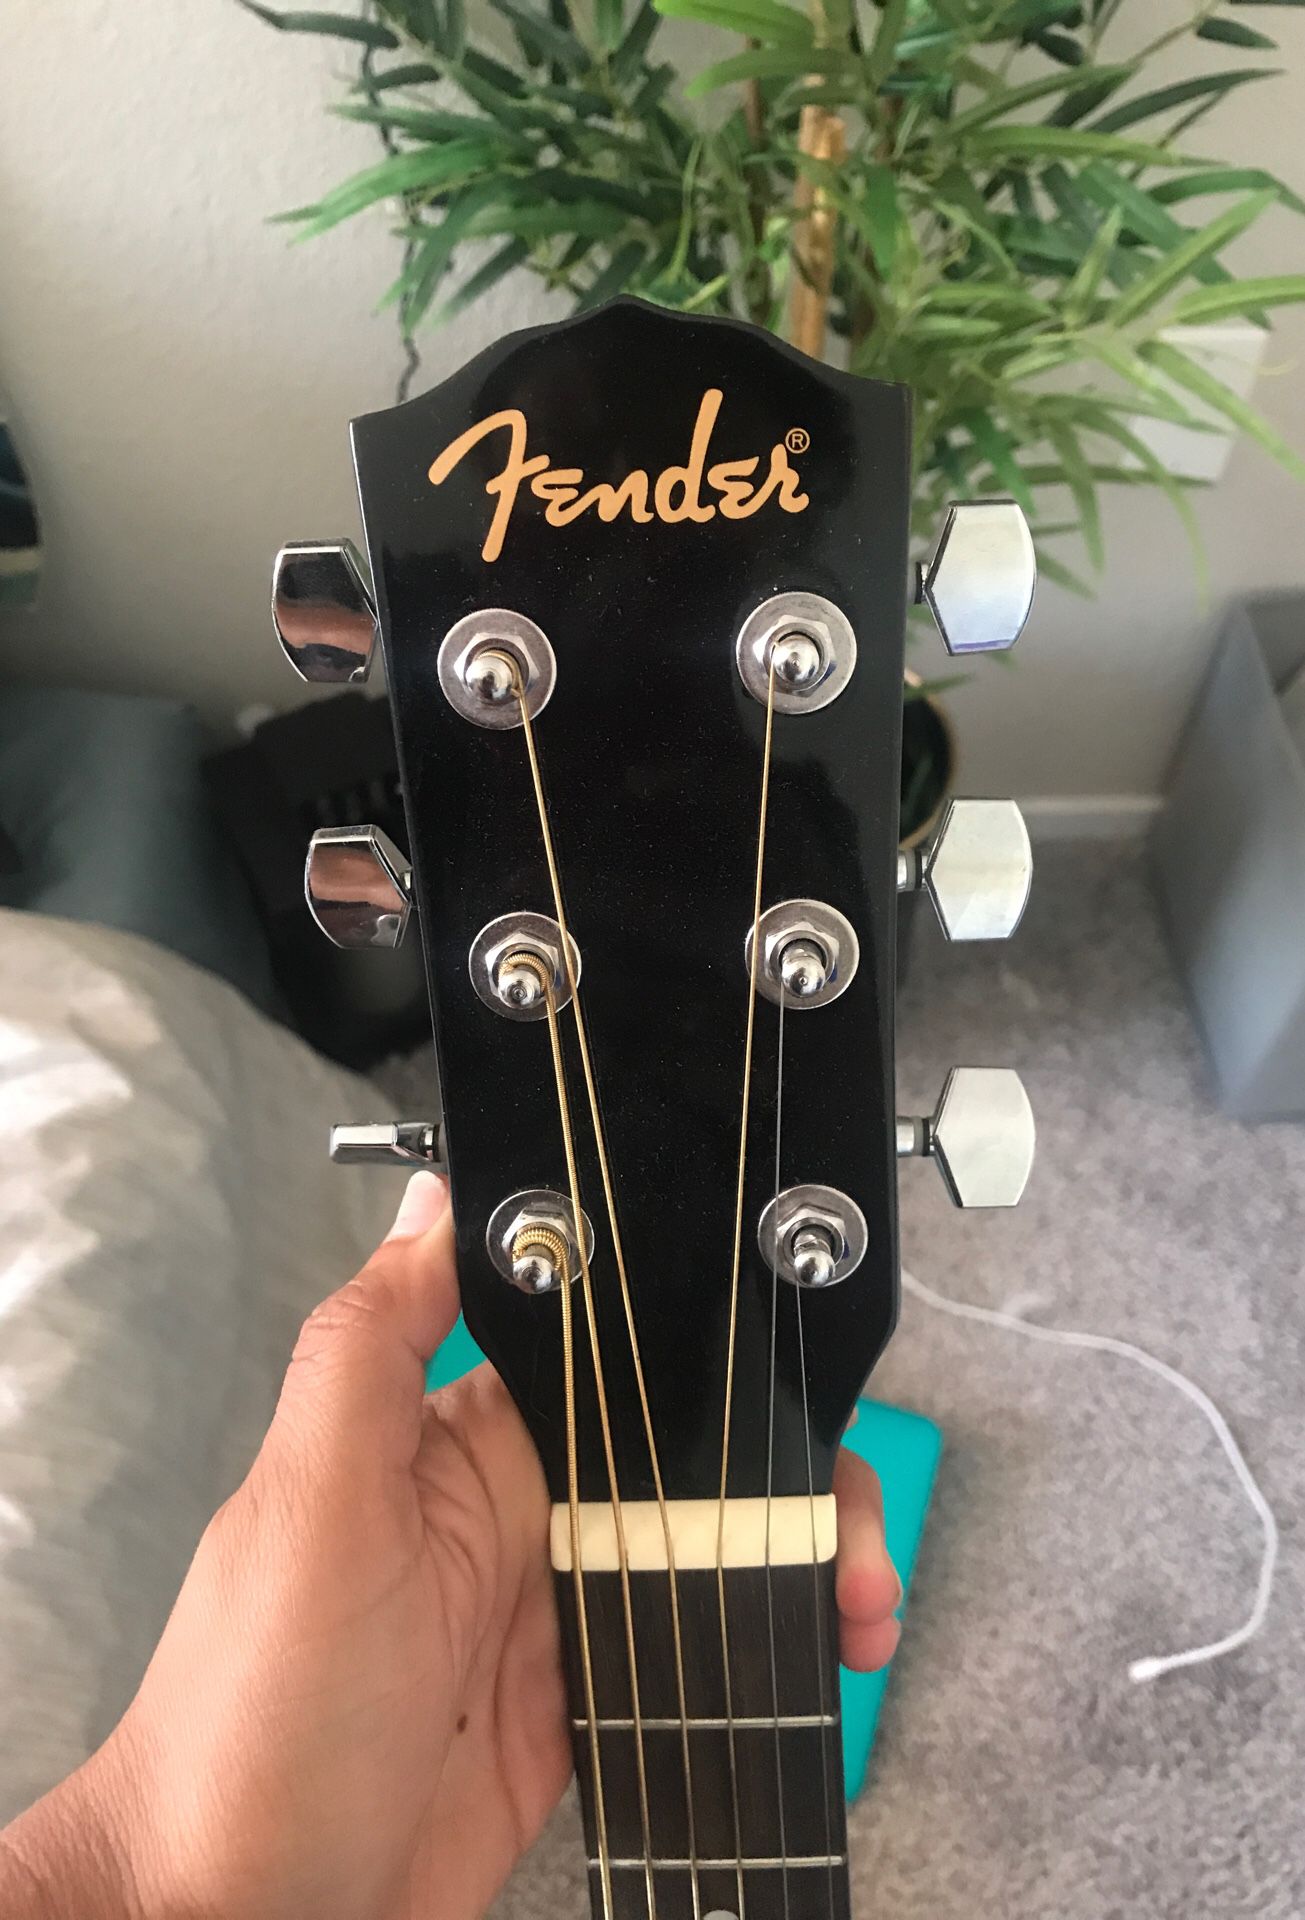 Fender guitar with bag